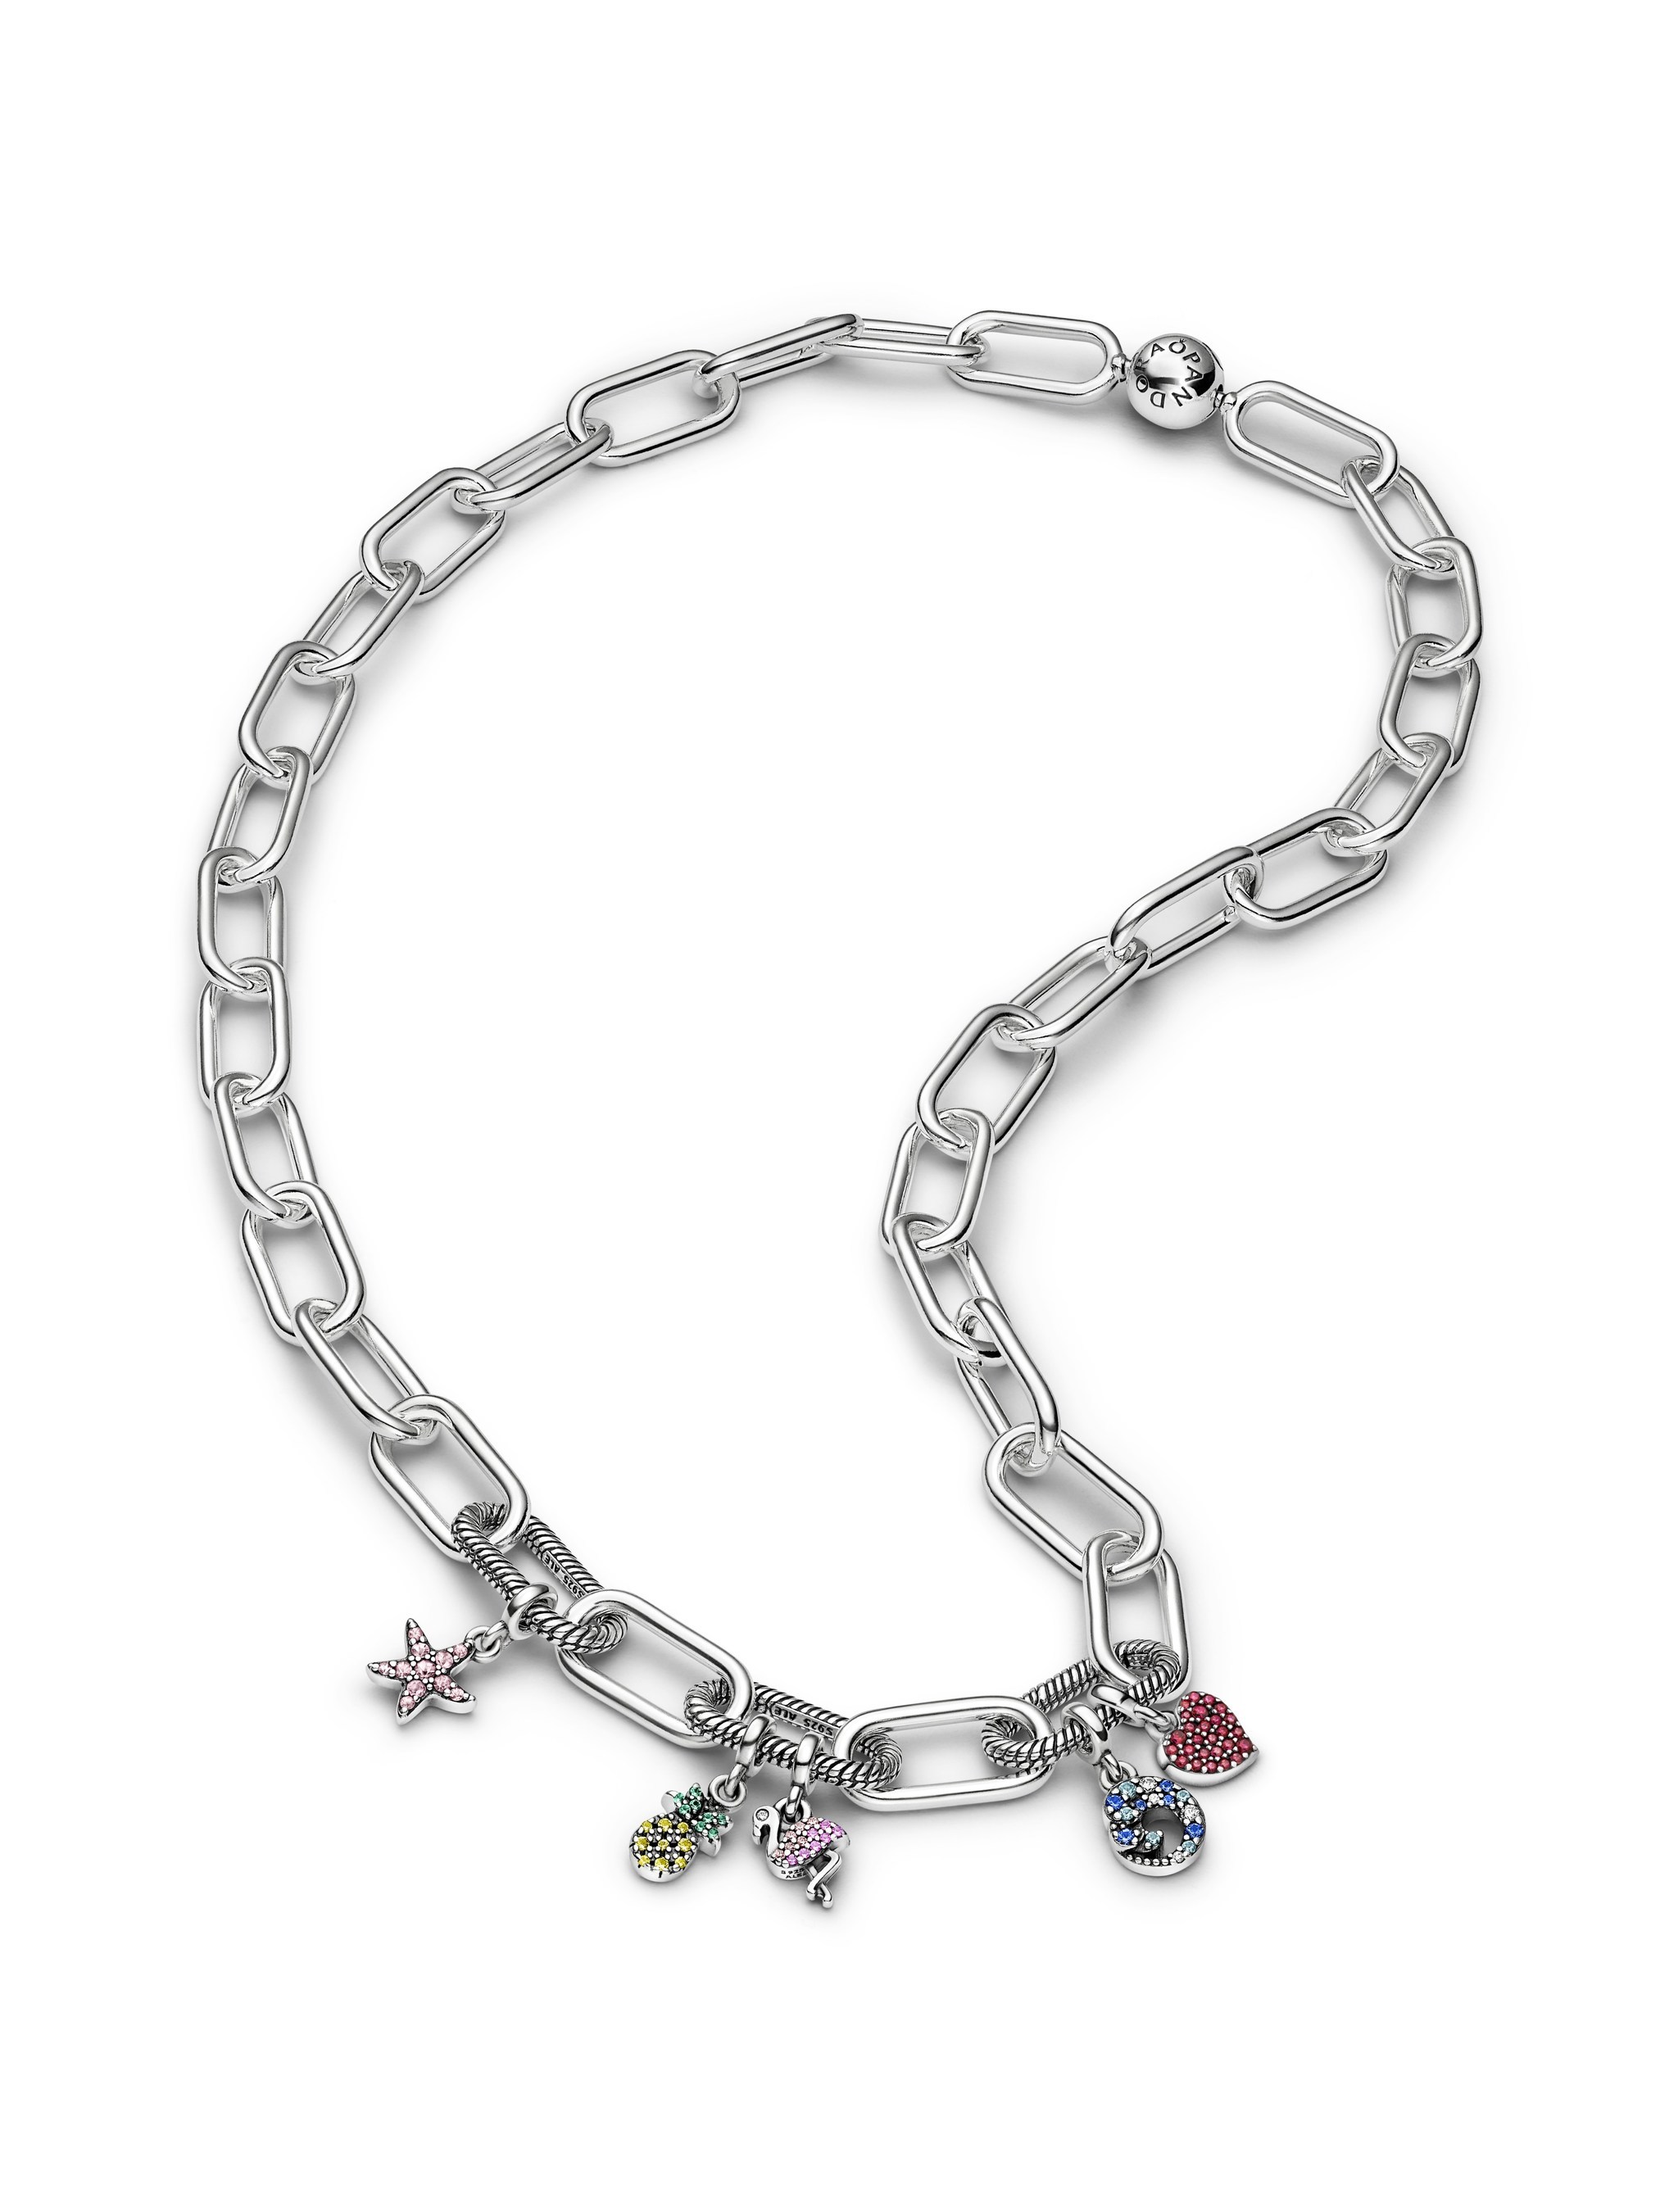 Millie Bobby Brown Co Designs New Pandora Me Jewelry